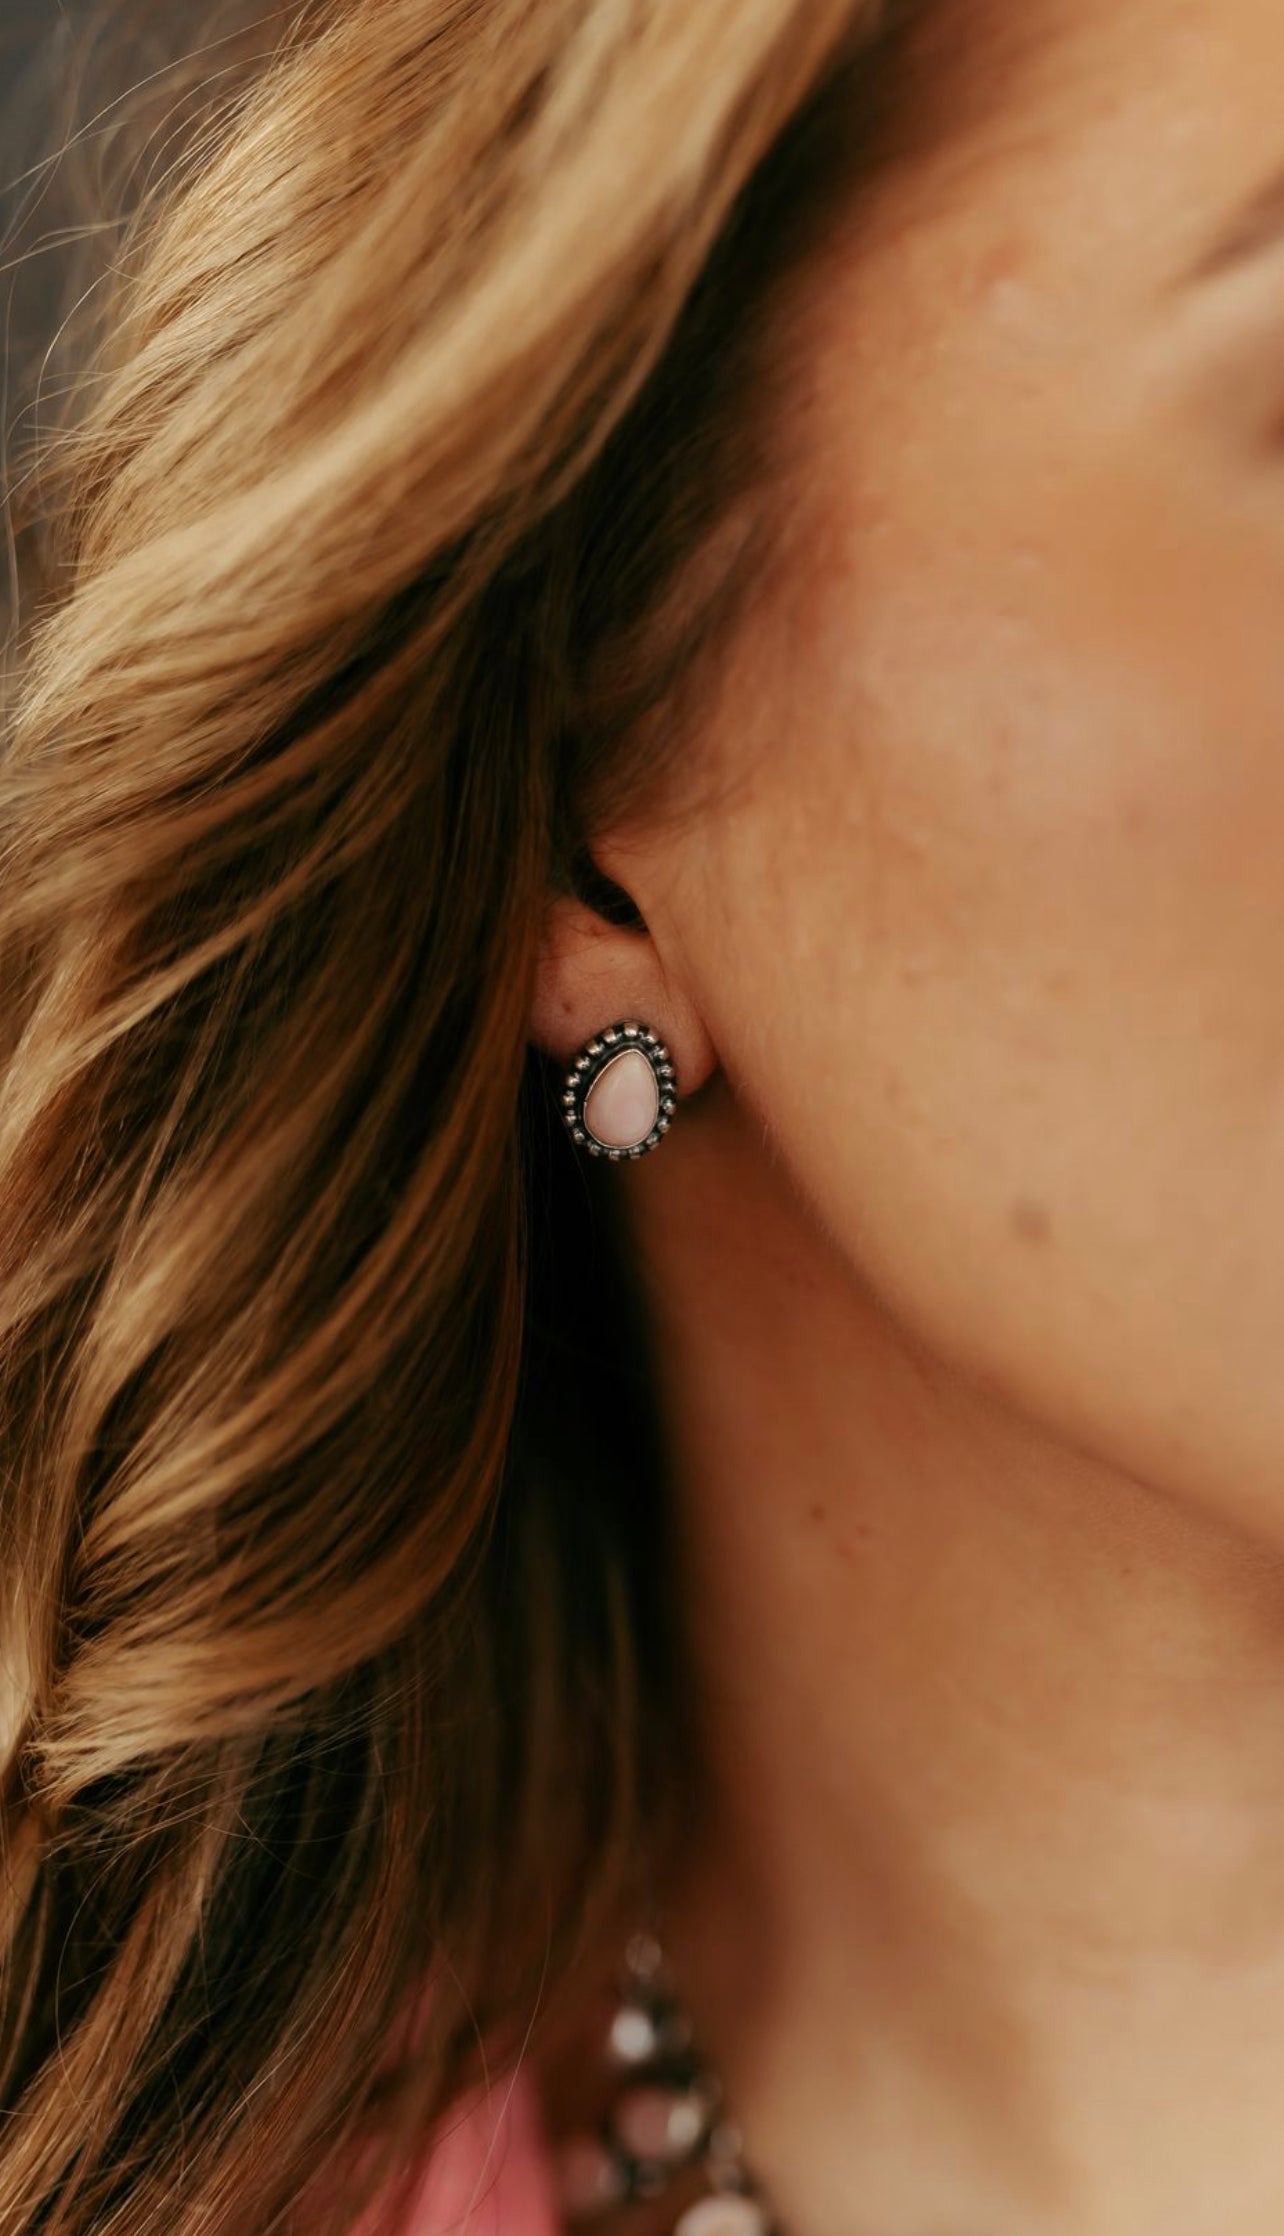 The Daniella Earrings